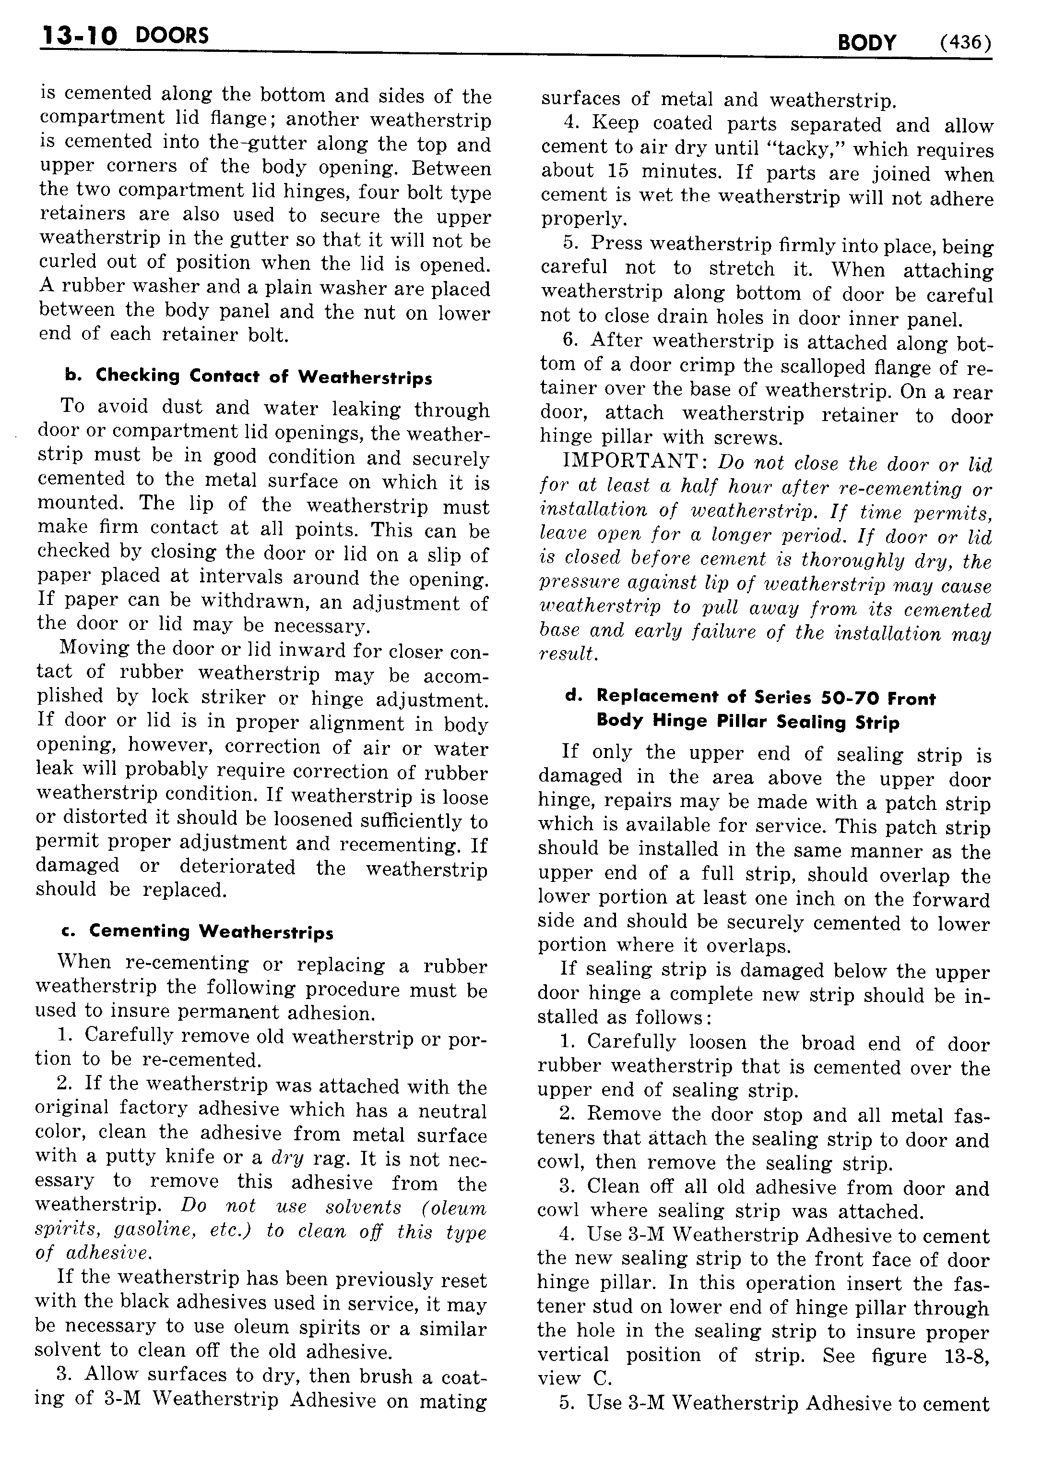 n_14 1951 Buick Shop Manual - Body-010-010.jpg